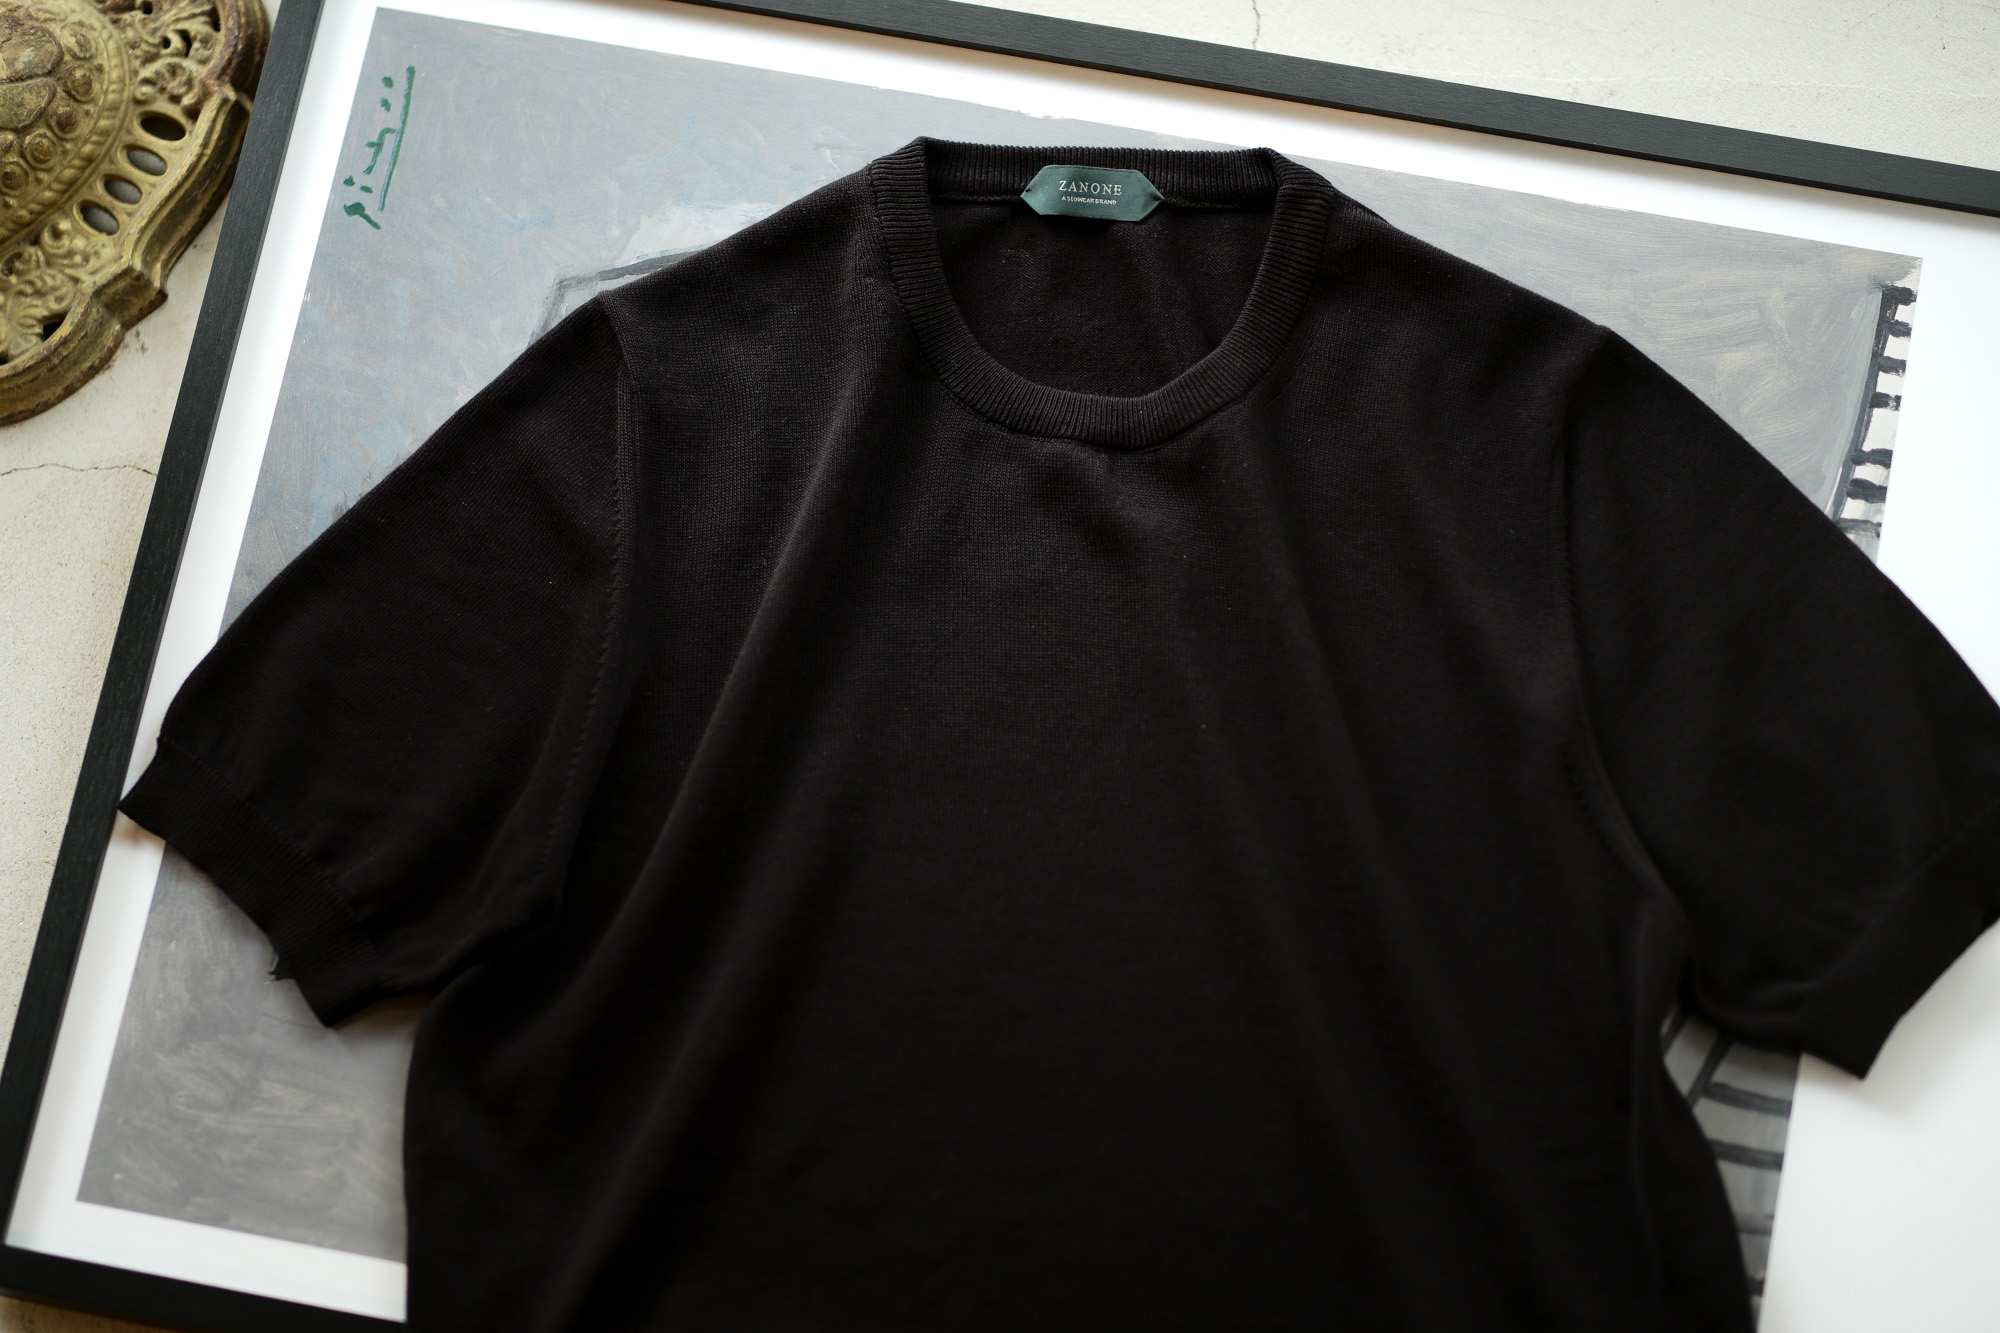 ZANONE(ザノーネ) Knit T-shirt (ニット Tシャツ) コットンニット Tシャツ BLACK (ブラック・Z3369) made in italy (イタリア製) 2020 春夏新作 愛知 名古屋 altoediritto アルトエデリット